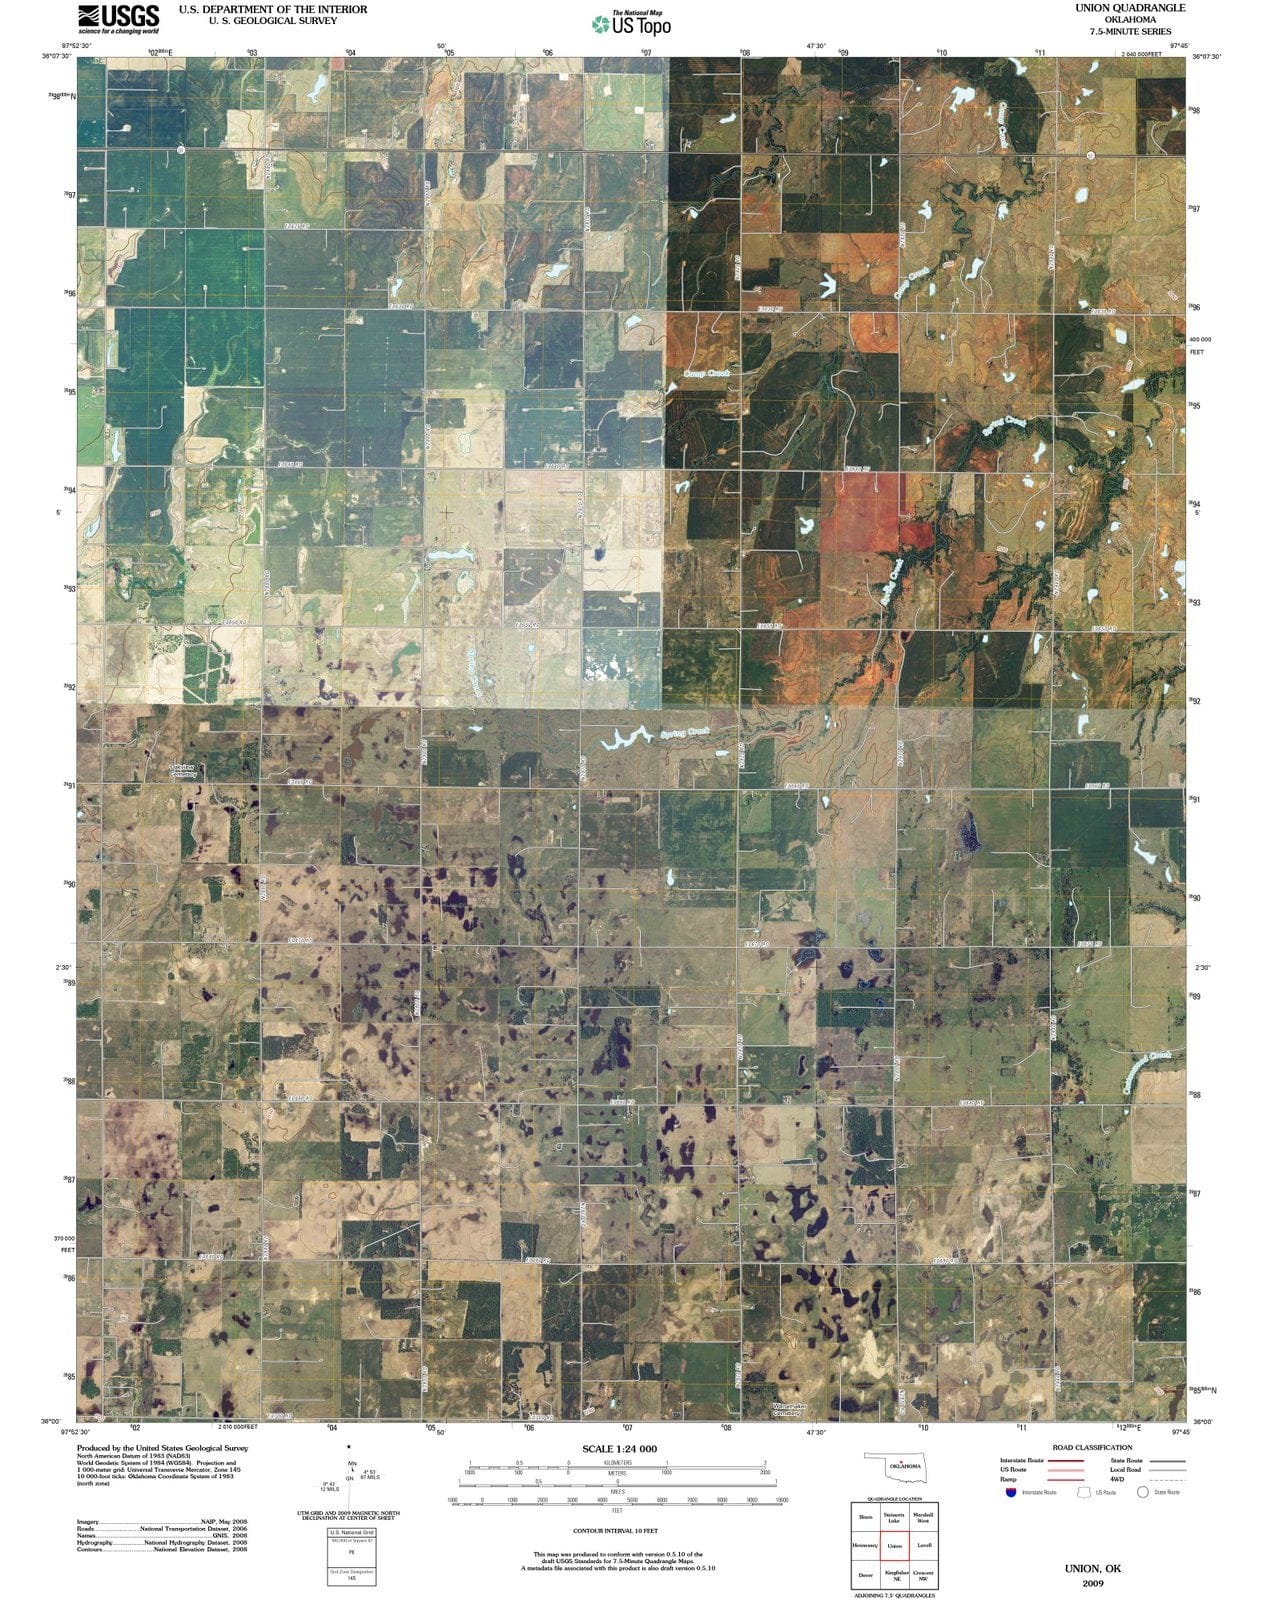 2009 Union, OK - Oklahoma - USGS Topographic Map